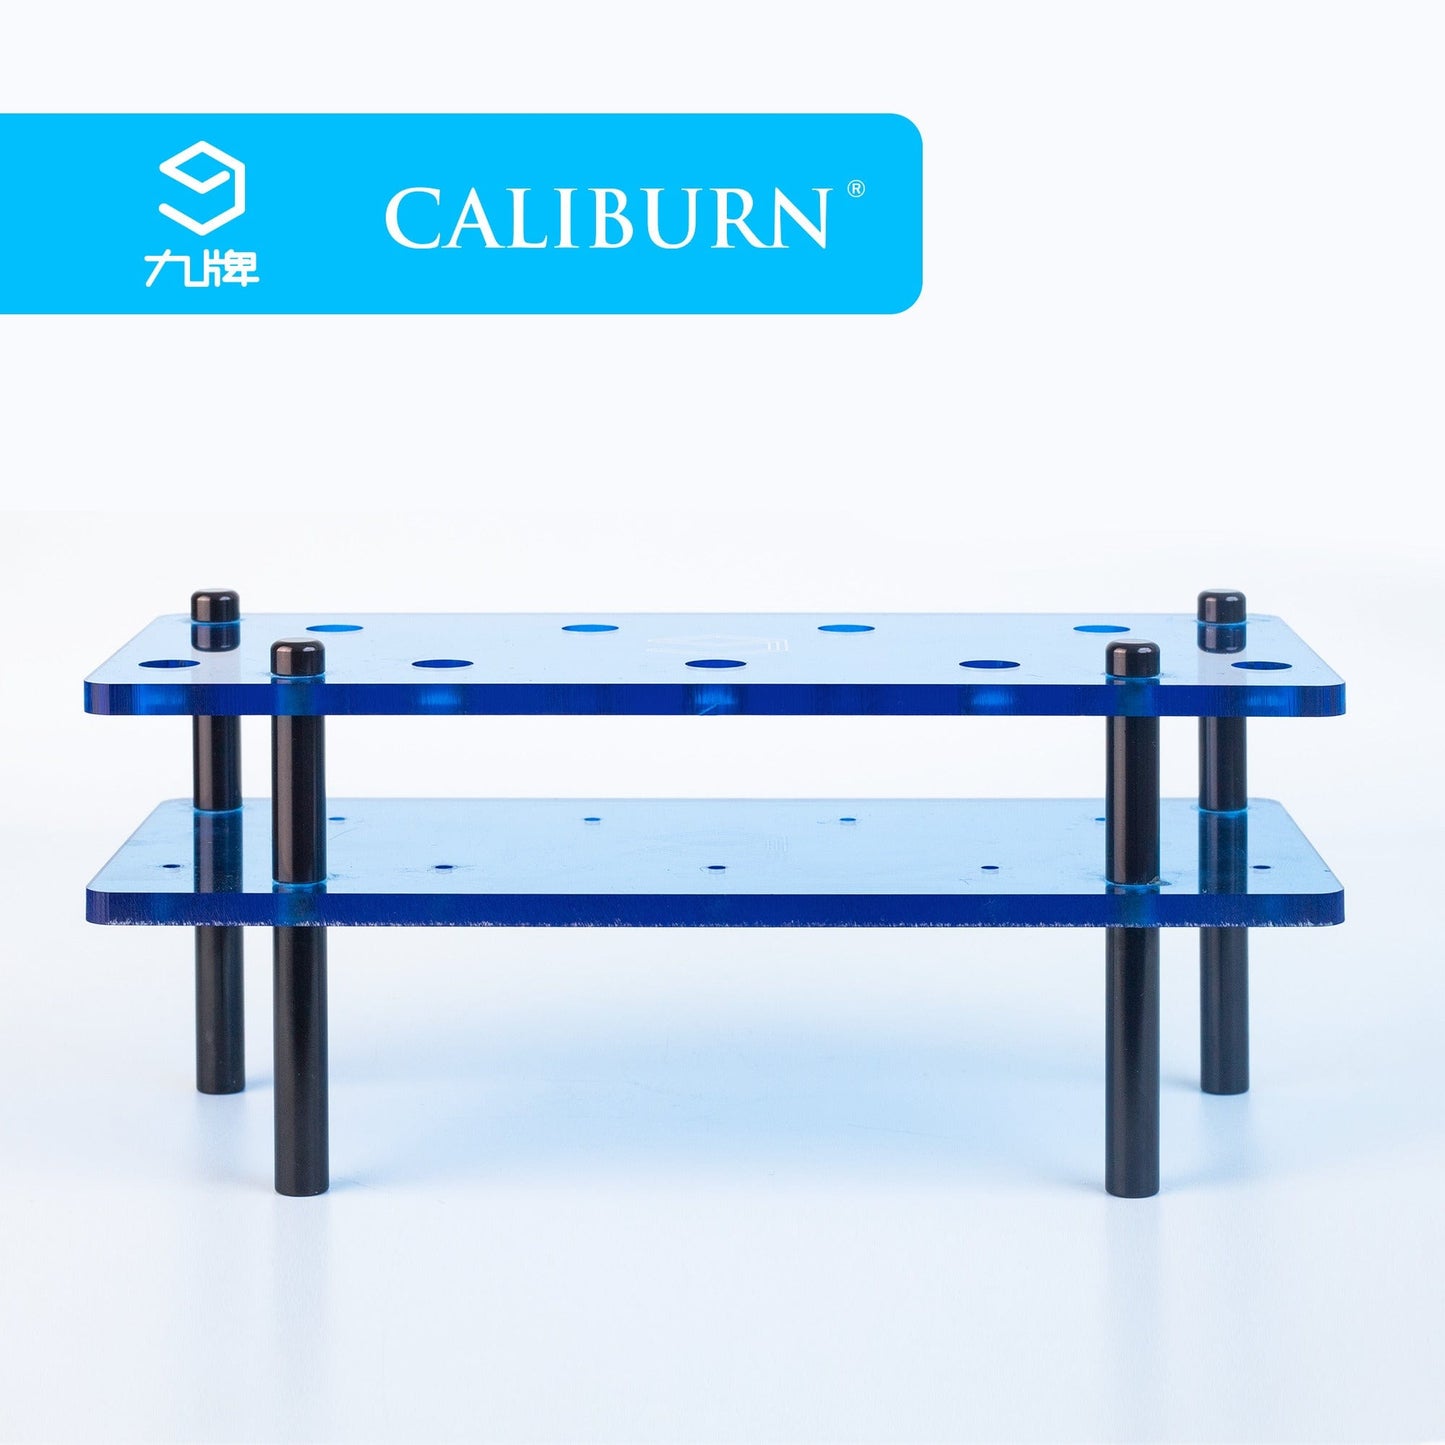 Caliburn Acrylic Darts Display Stand - Holds 3 Sets